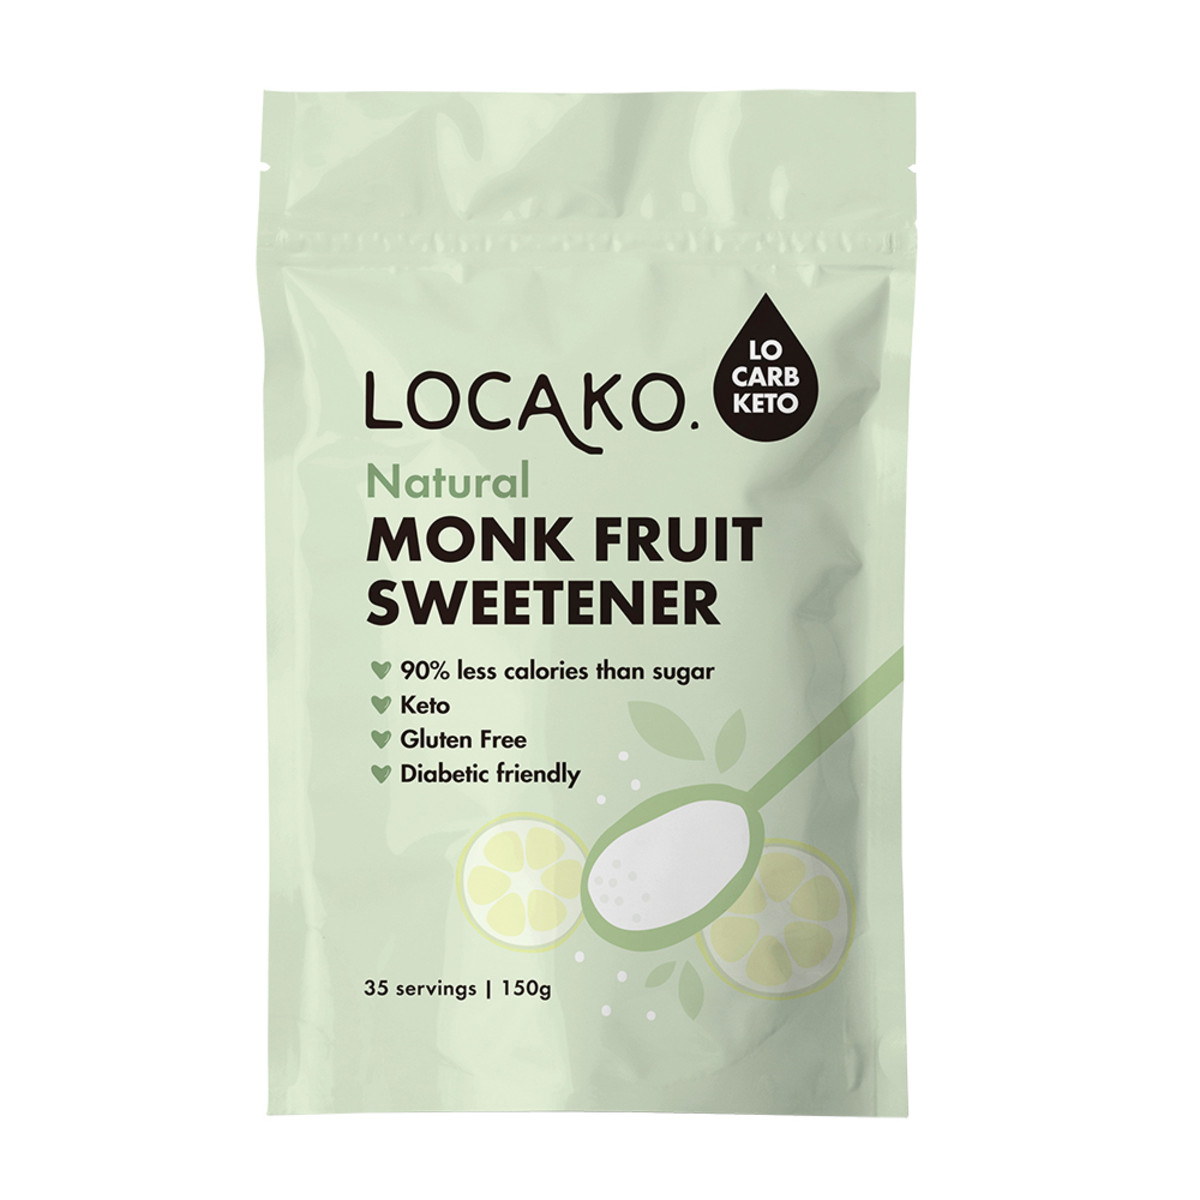 LOCAKO - Monk Fruit Sweetener Natural